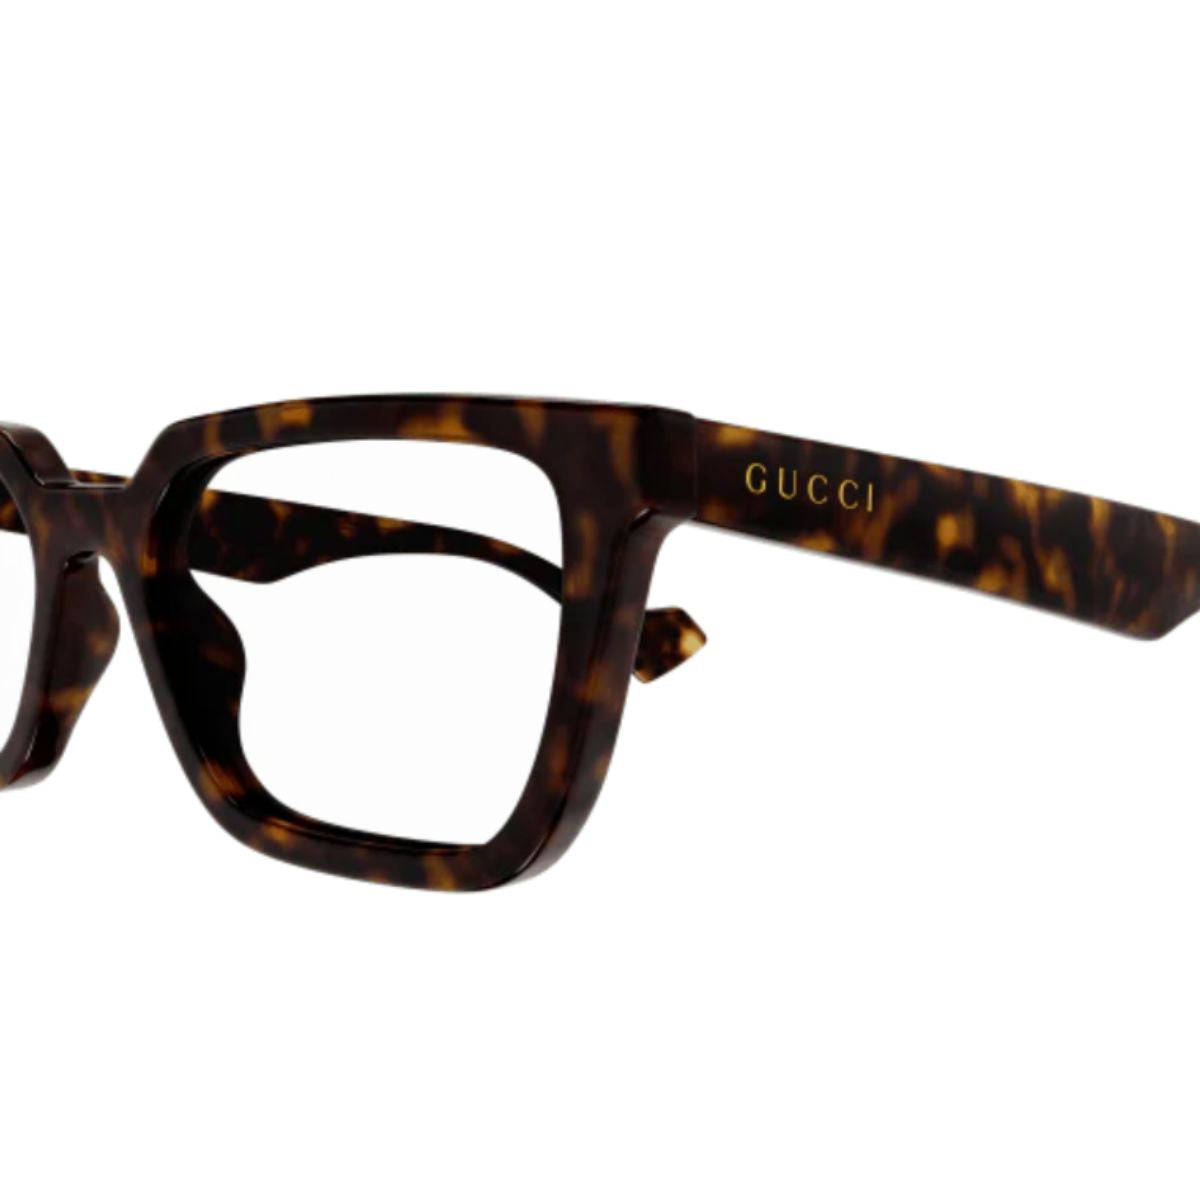 "Gucci 1539O 002 Men's Eyeglasses Frames"